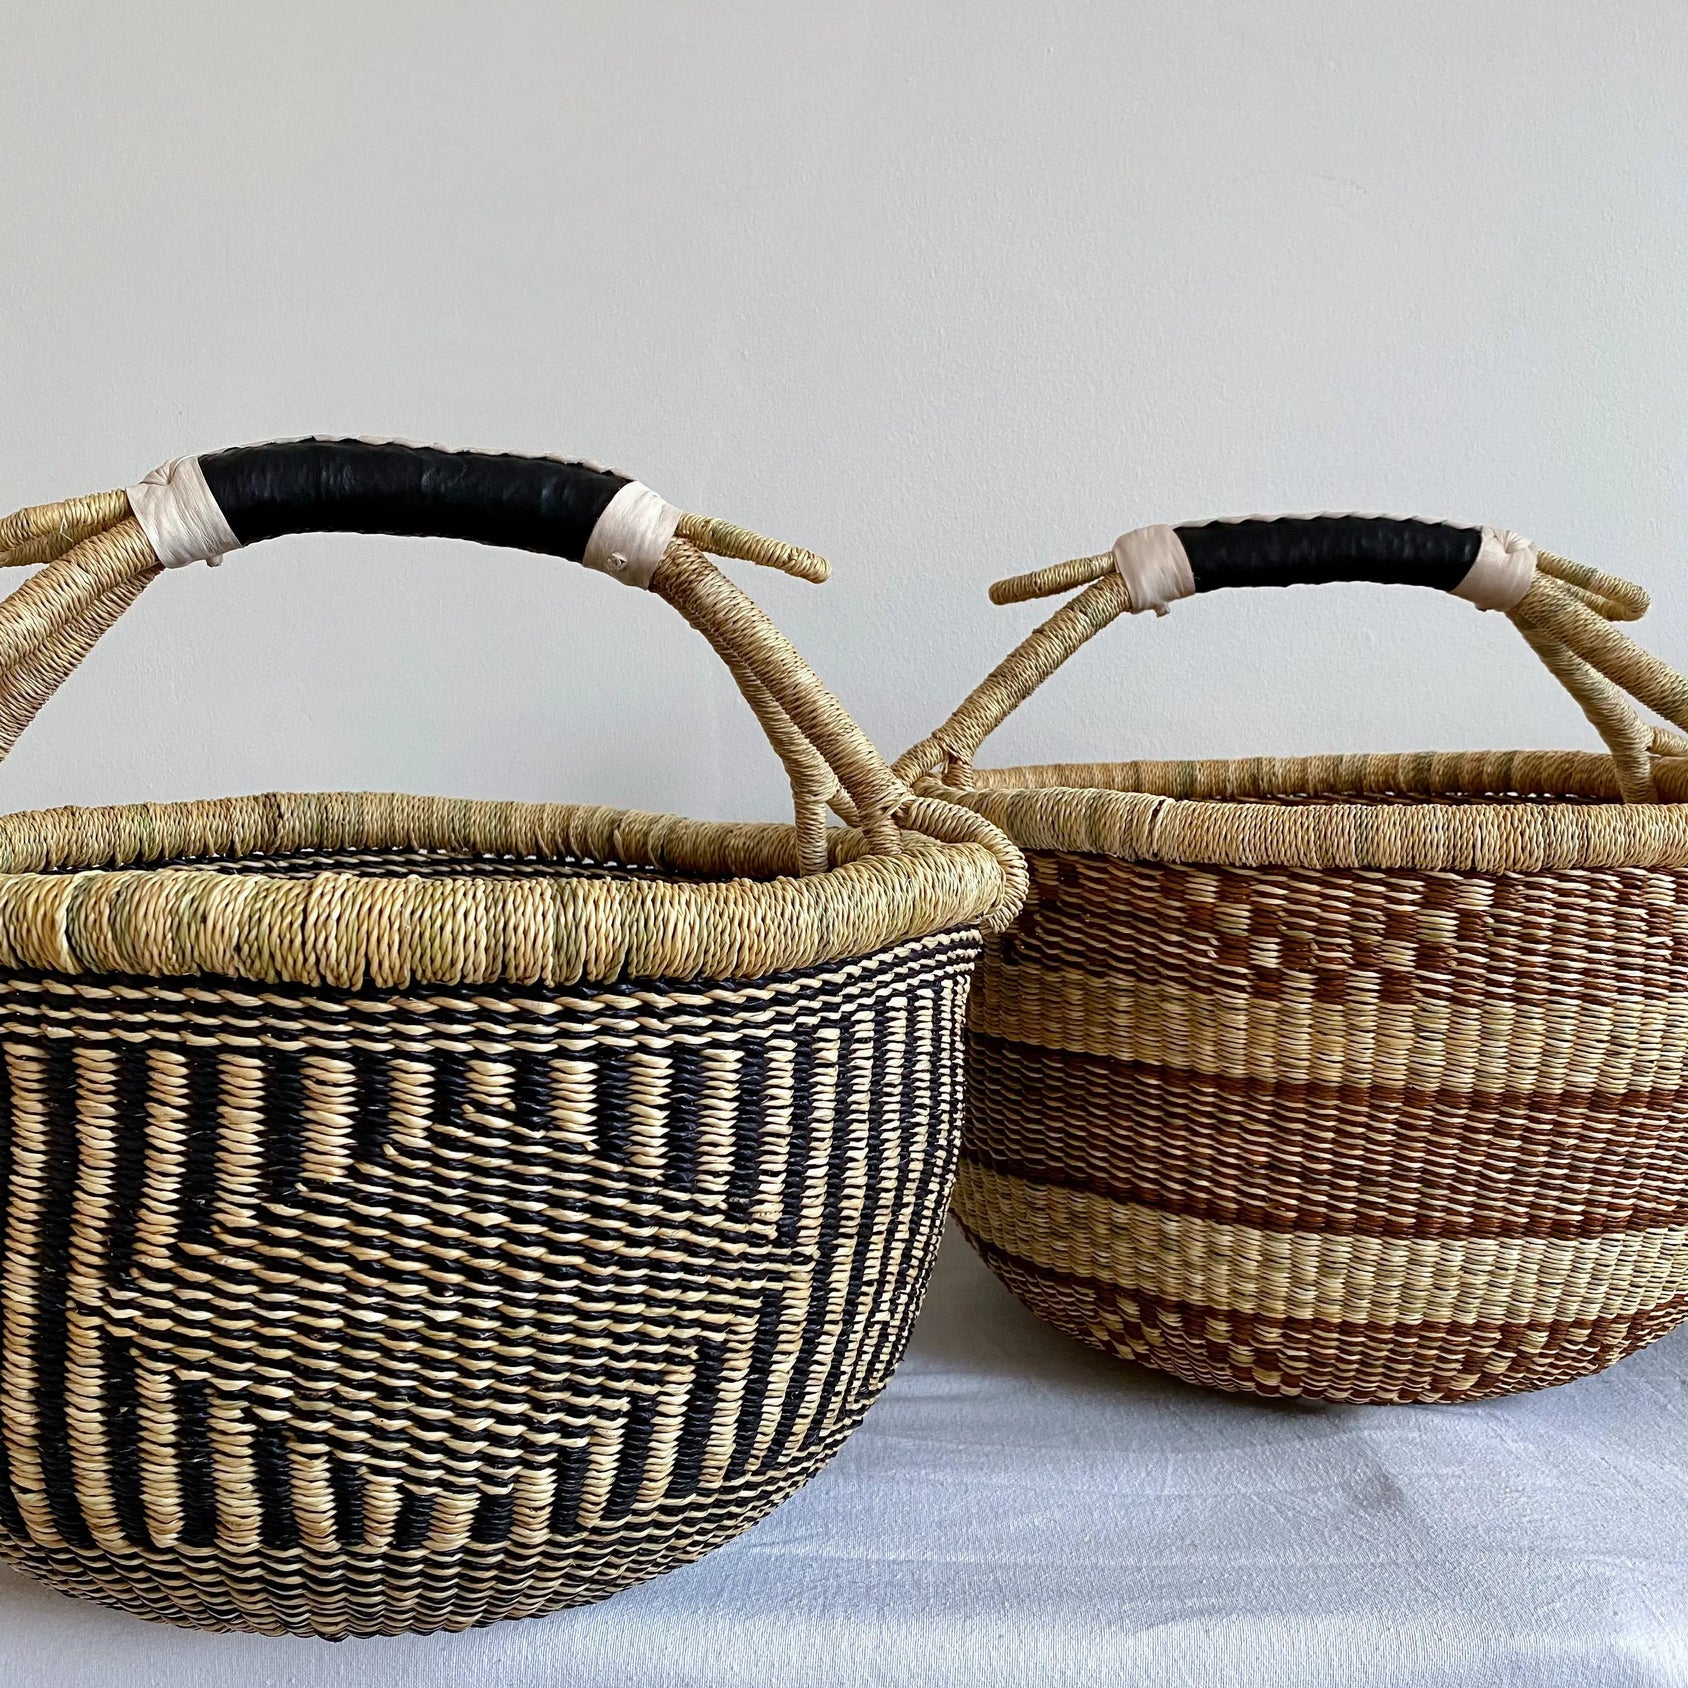 Market Basket no. 3 Mambo Baskets